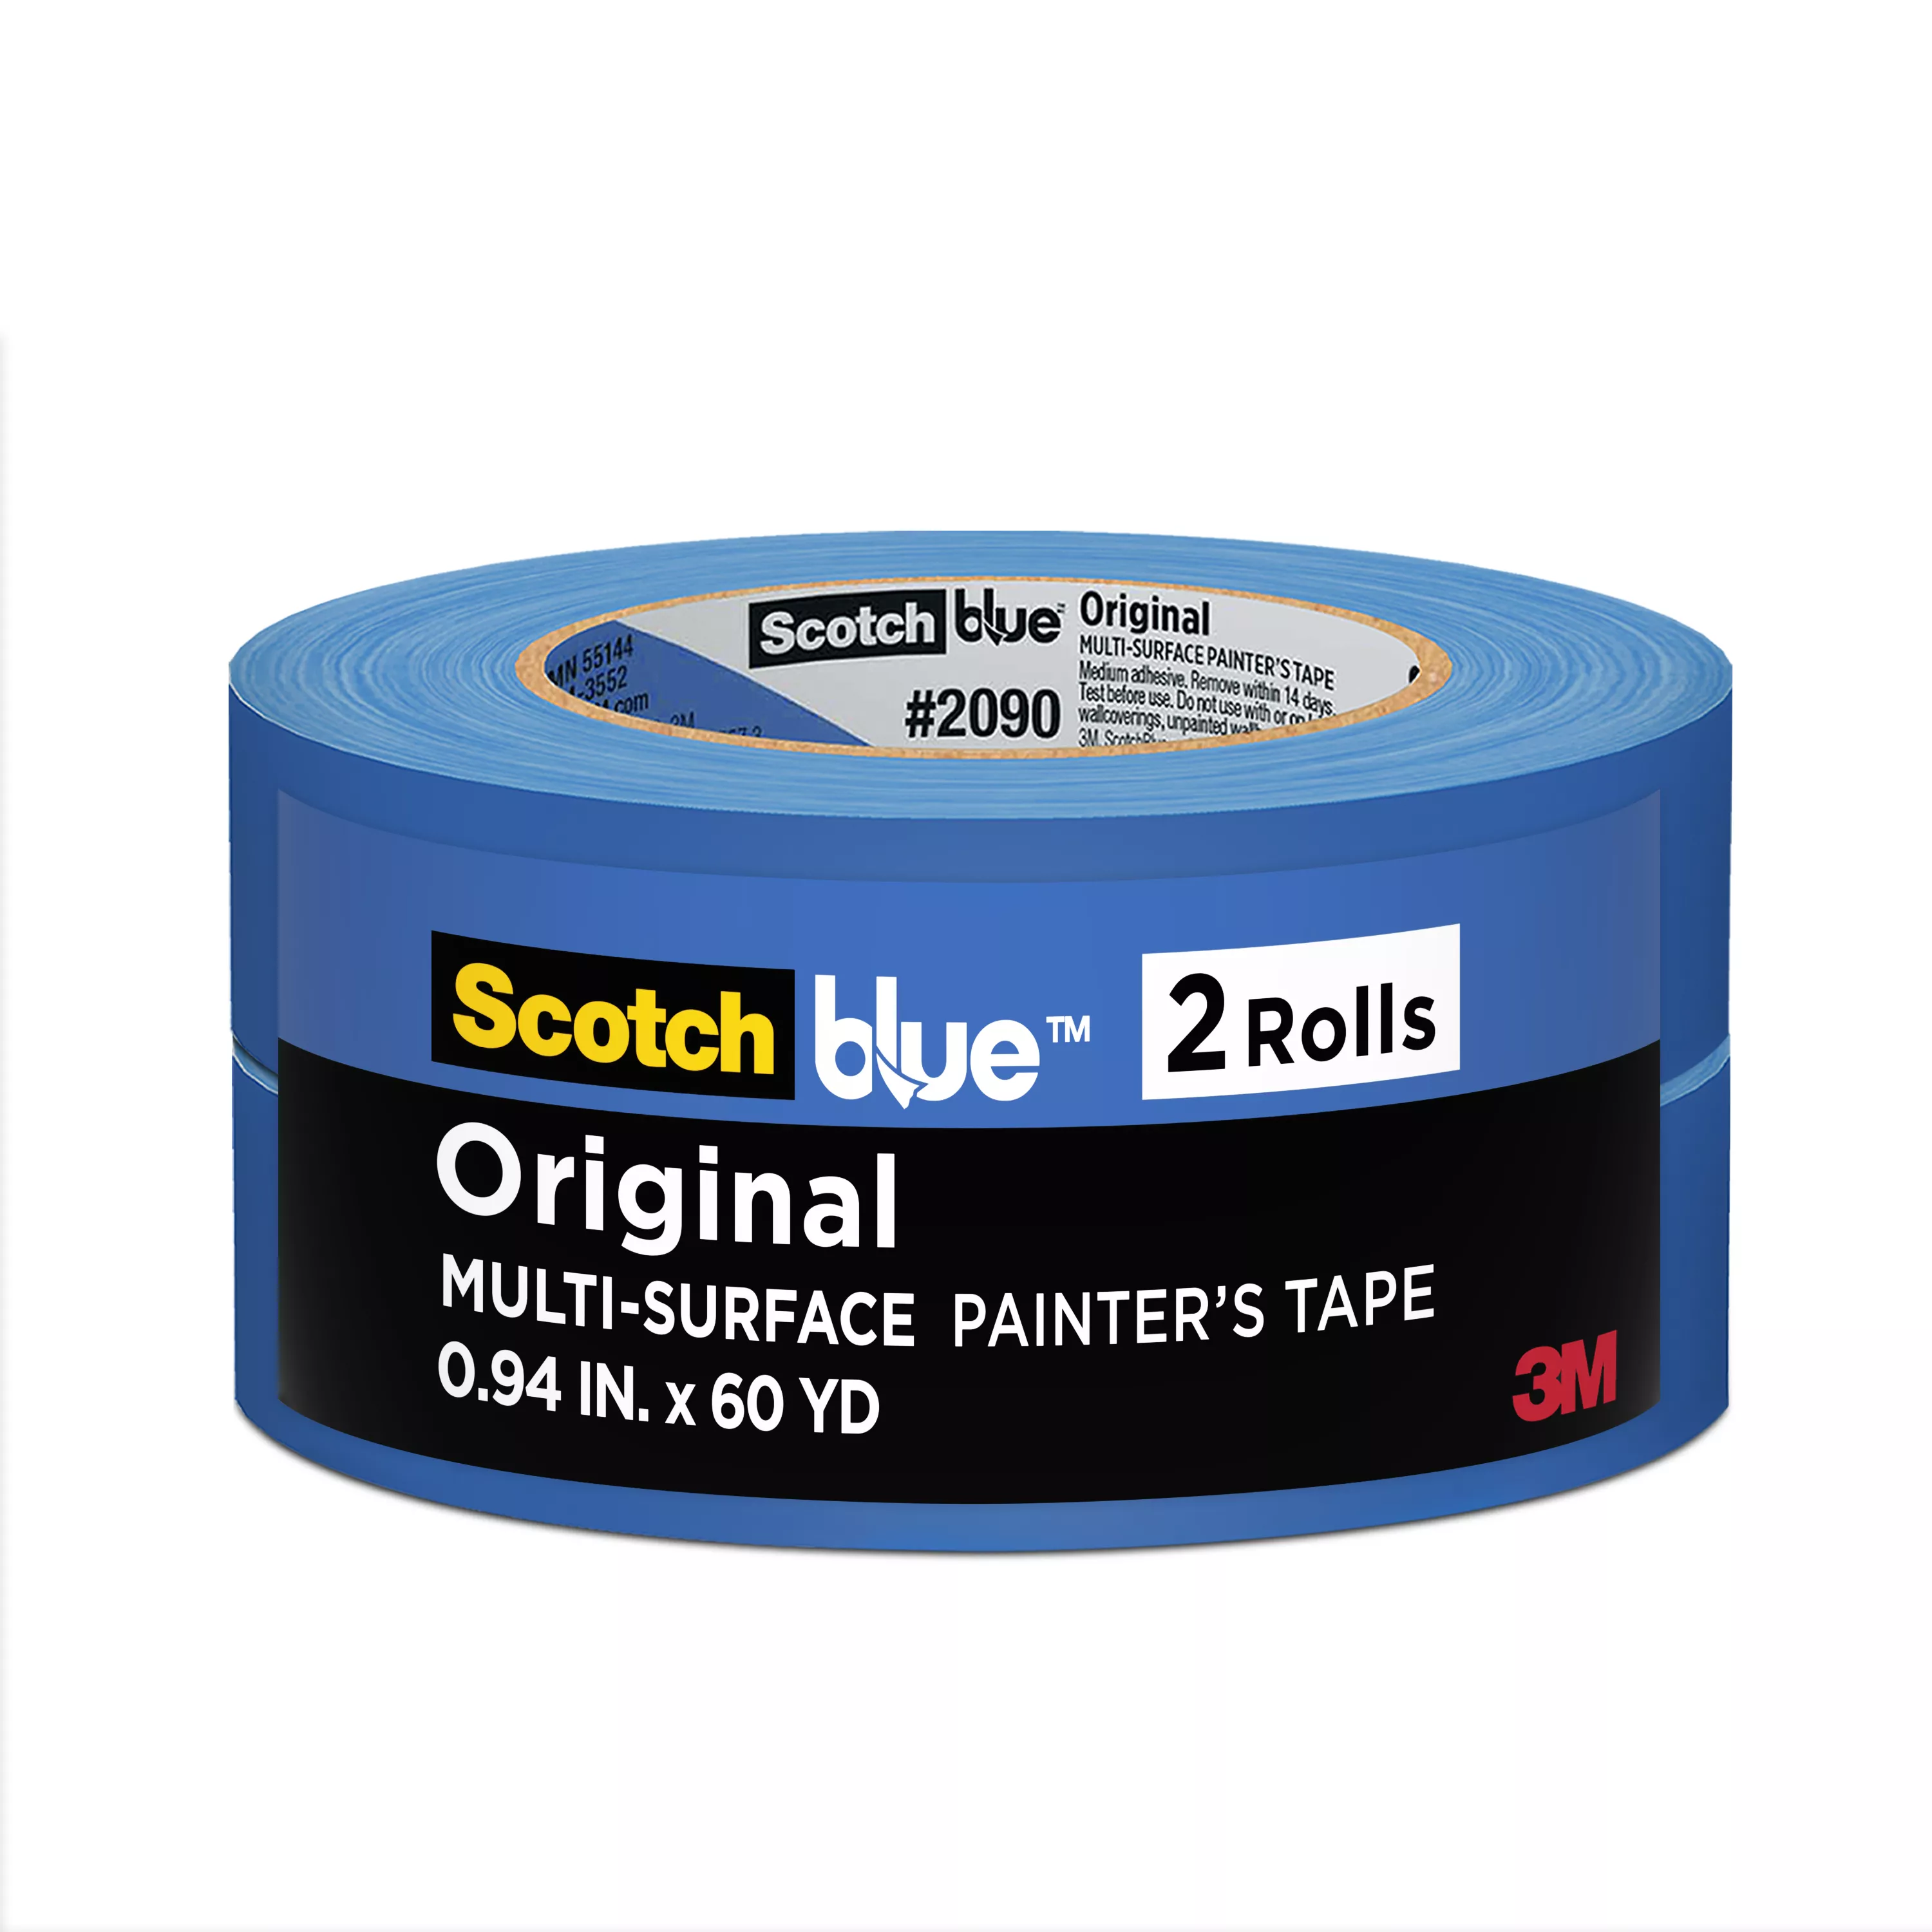 ScotchBlue™ Original Painter's Tape 2090-24CC2, 0.94 in x 60 yd (24mm x
54,8m), 2rolls /pack